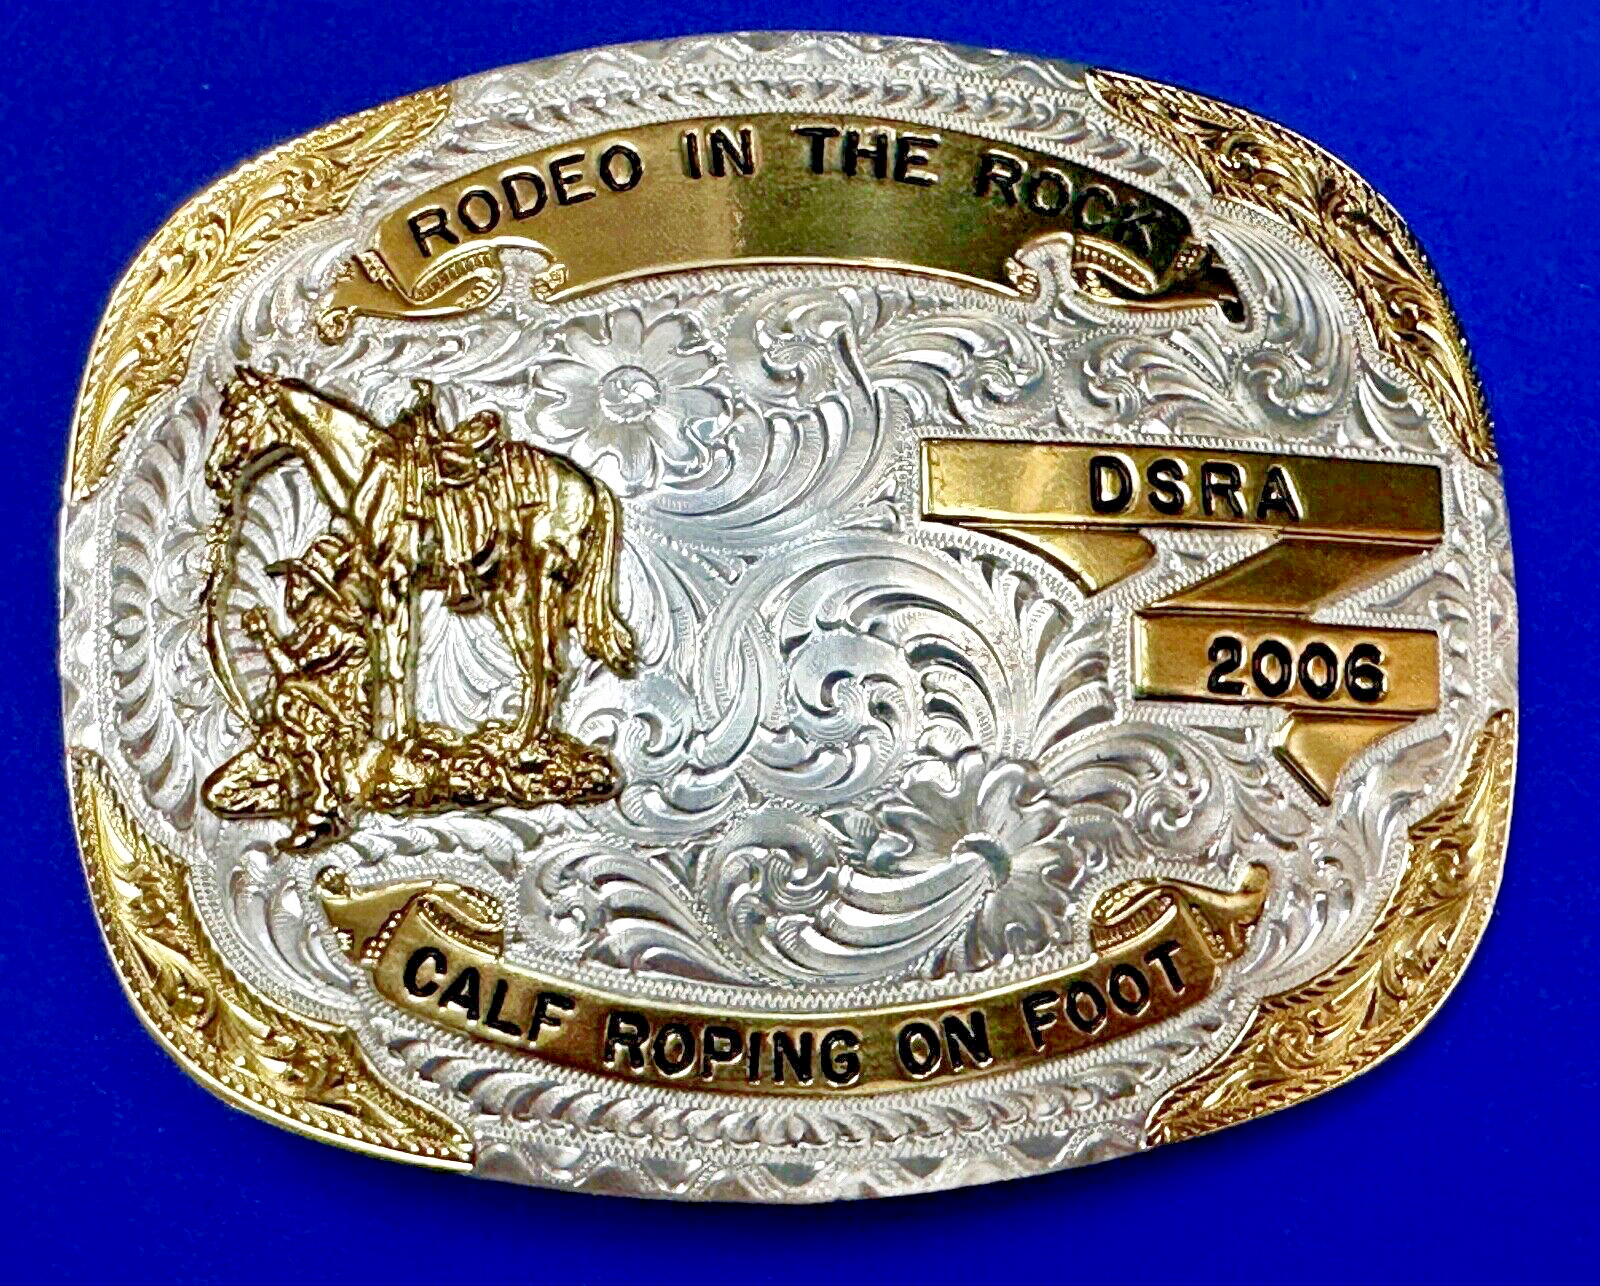 Calf Roping on Foot DSRA AR 2006 Trophy Montana Silversmiths Belt Buckle in box